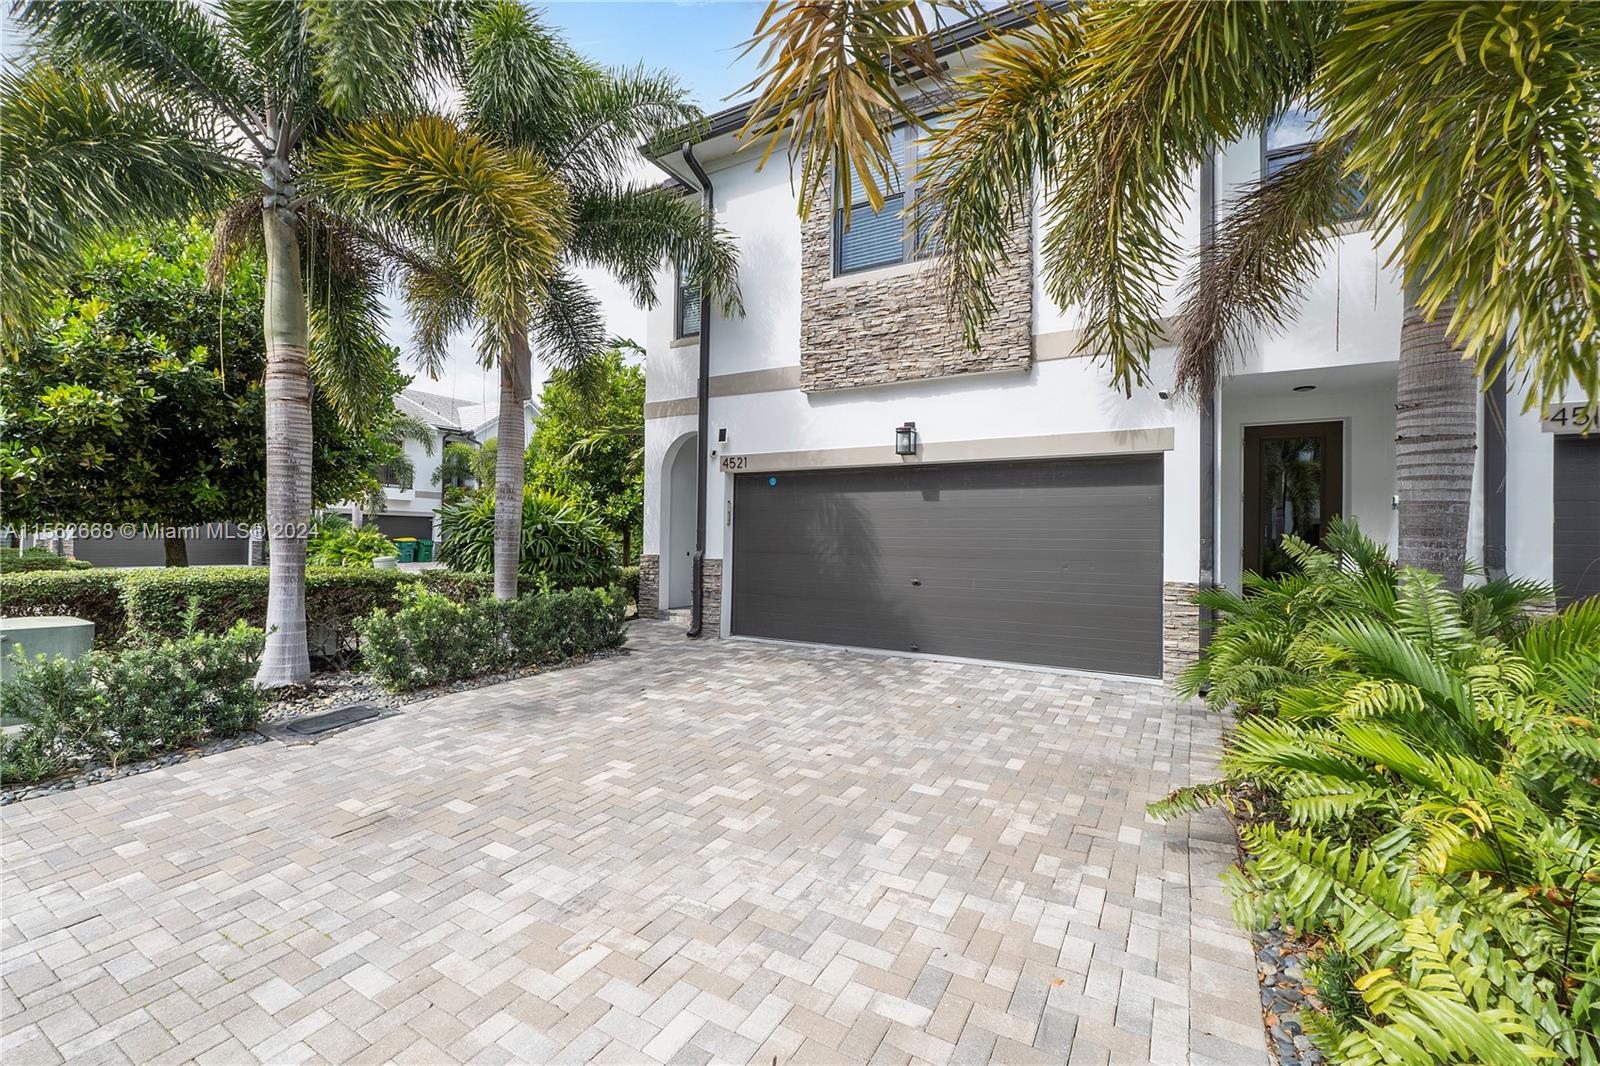 Property for Sale at 4521 E Aqua Bella Ln, Dania Beach, Miami-Dade County, Florida - Bedrooms: 3 
Bathrooms: 3  - $700,000